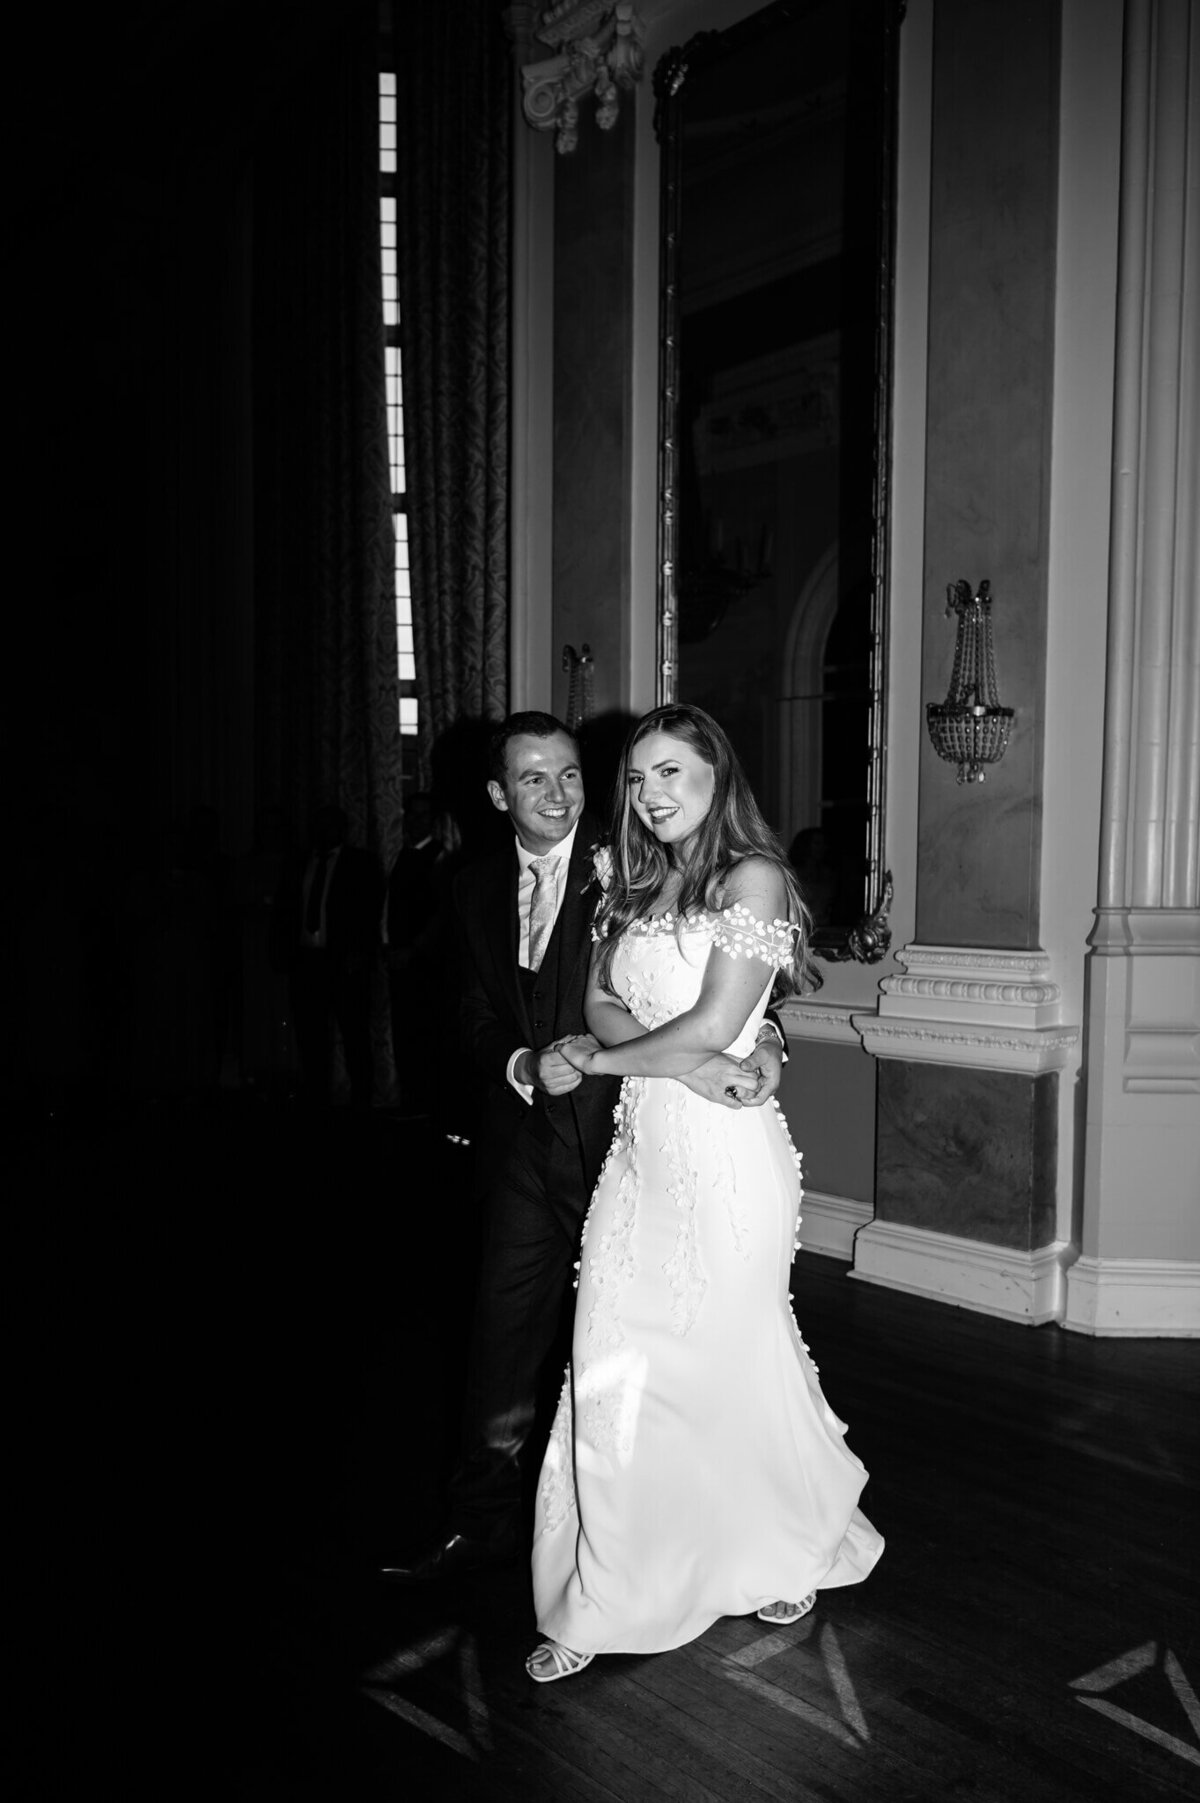 Danesfield House Hotel Wedding Photographer - Buckinghamshire Wedding Photographer - Chloe Bolam - 13.07.23 -51